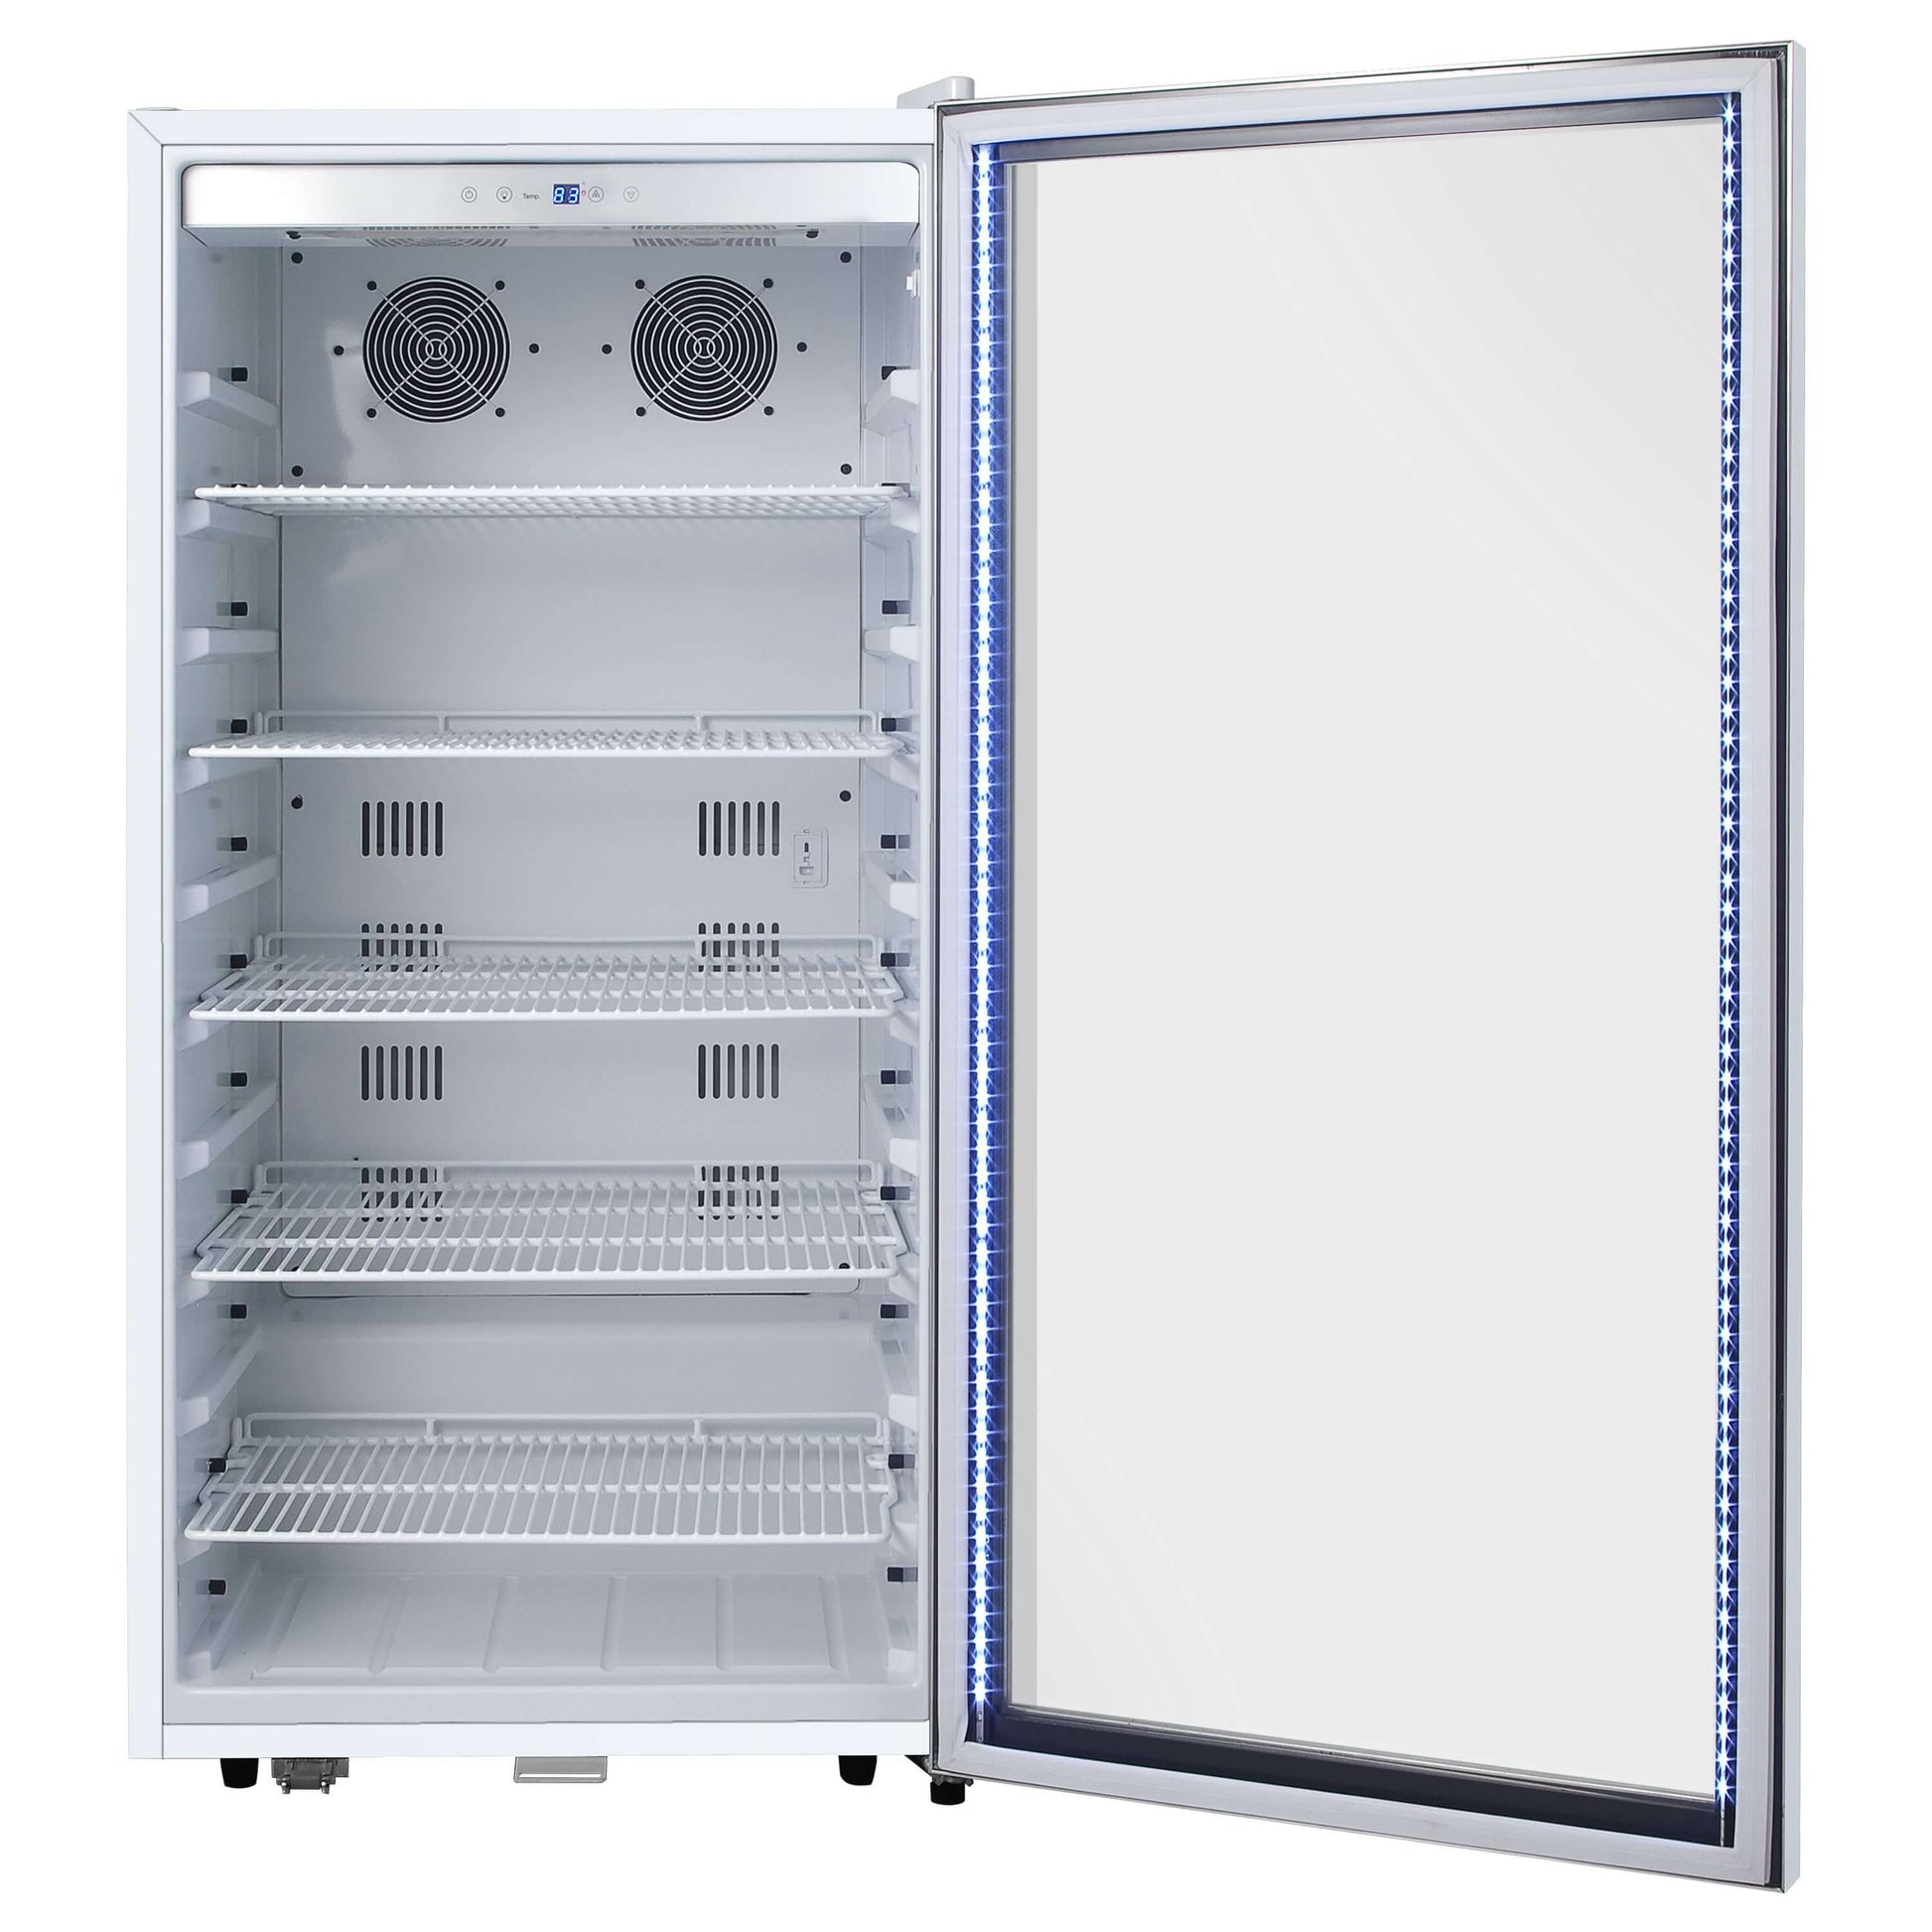 Whynter CBM-815WS/CBM-815WSa Freestanding 8.1 cu. ft. Stainless Steel Commercial Beverage Merchandiser Refrigerator with Superlit Door and Lock – White